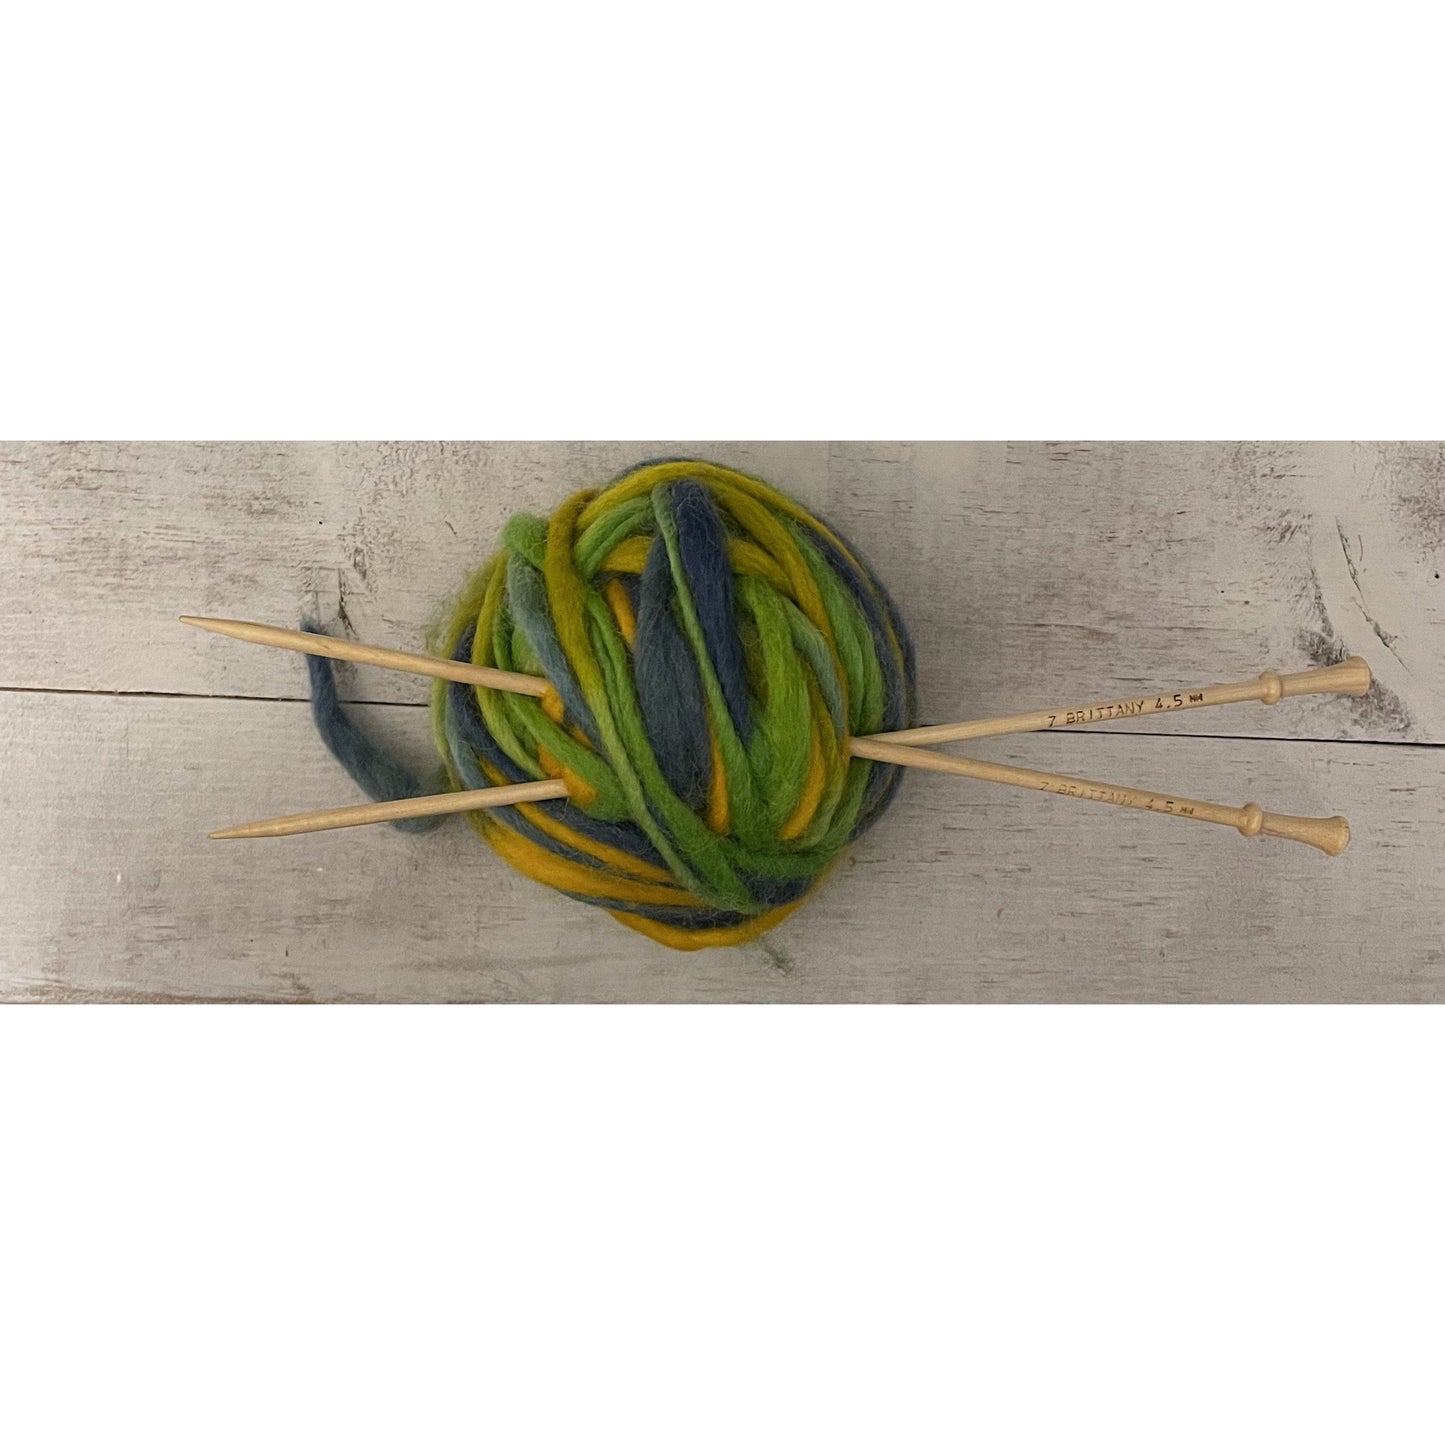 Brittany Single Point Wooden Knitting Needles - Alder & Alouette